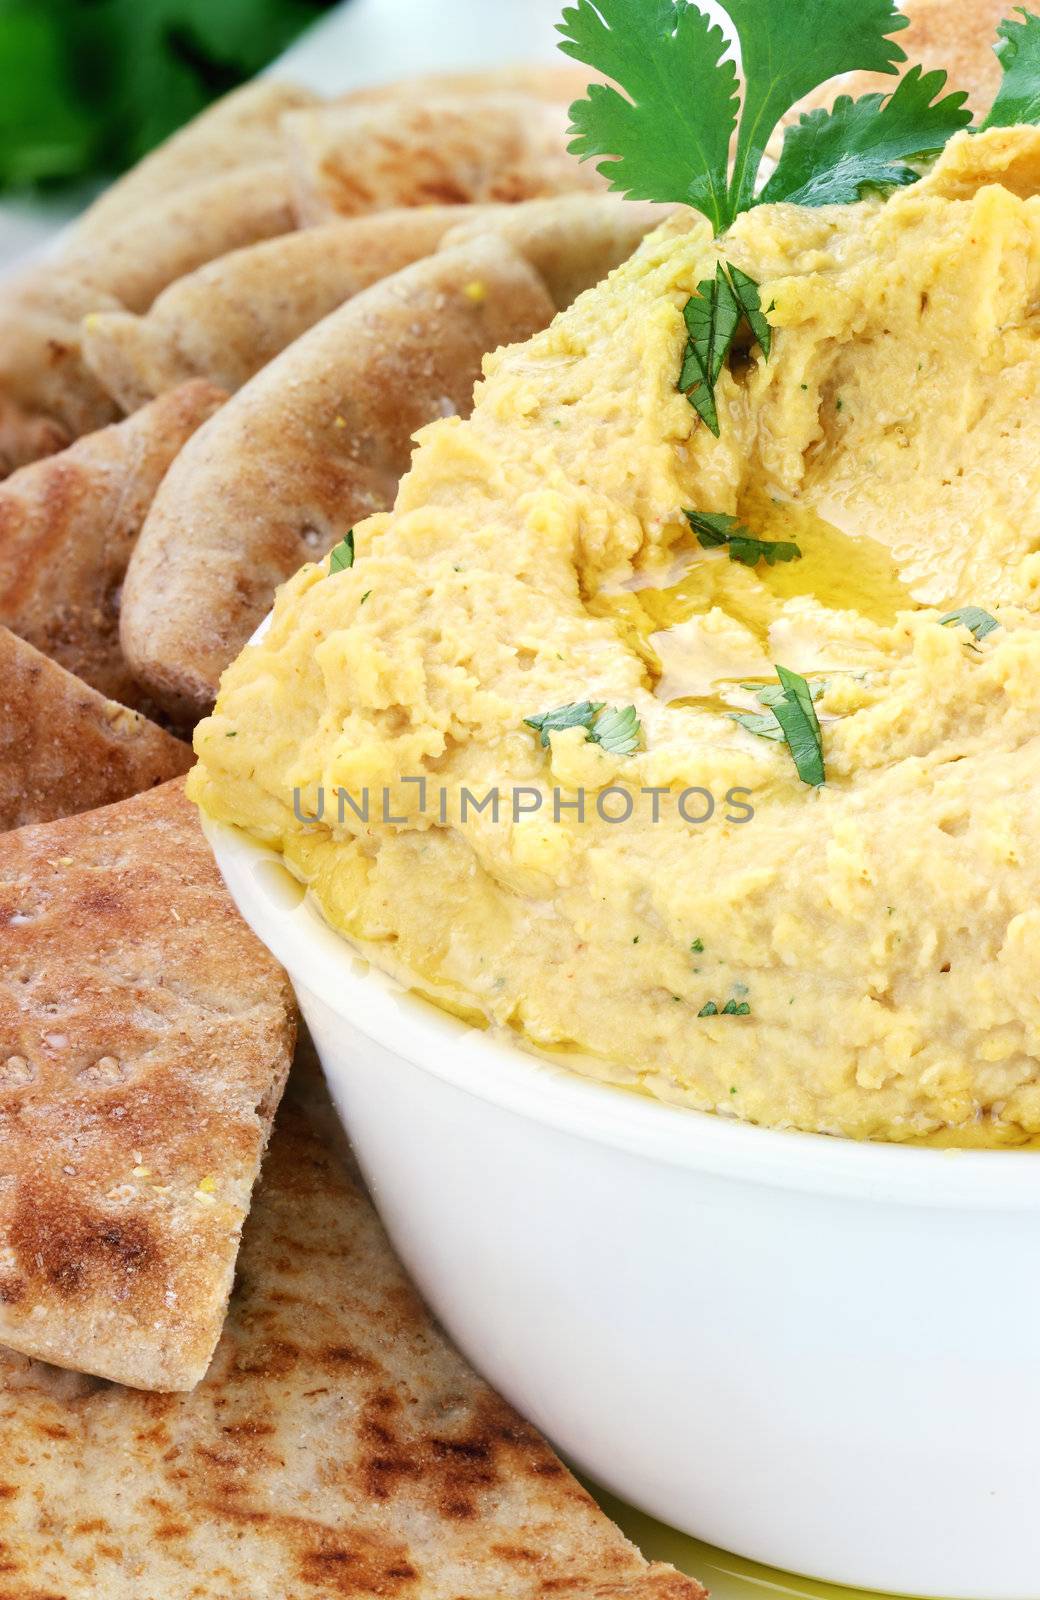 Hummus And Pita bread by StephanieFrey